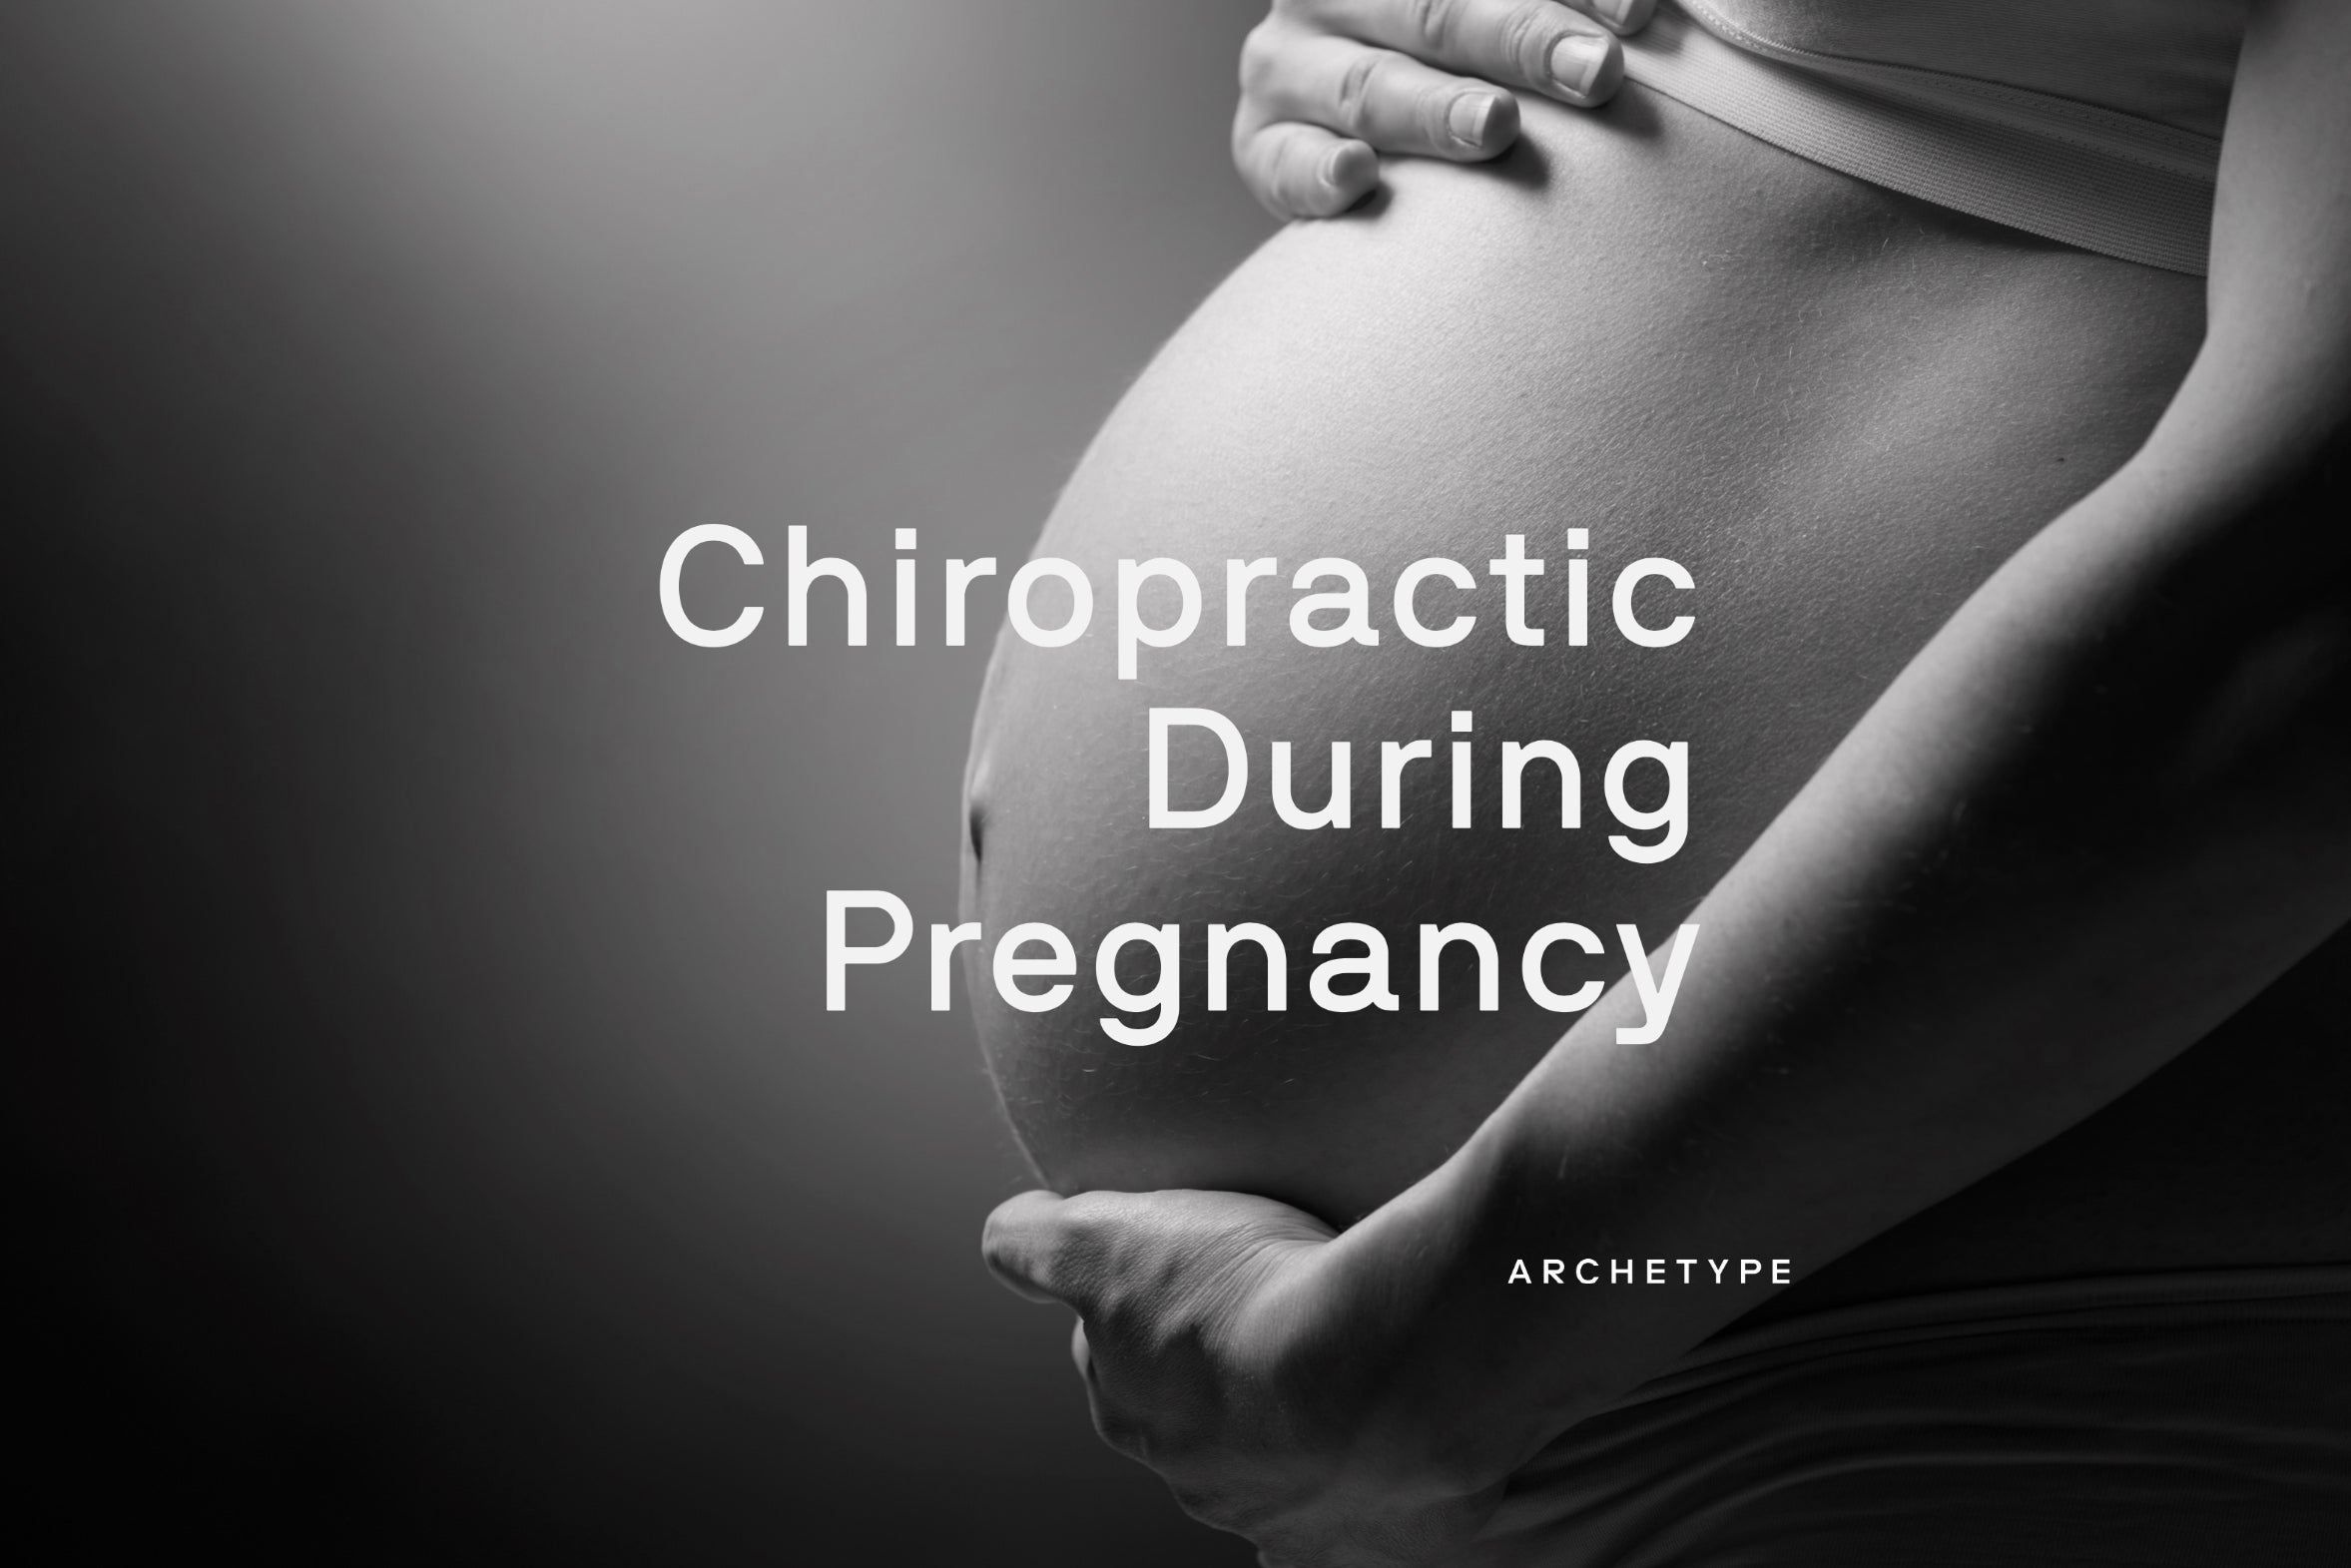 Chiropractic During Pregnancy. Dr. John Palmer - Archetype Birmingham - chiropractor near me.